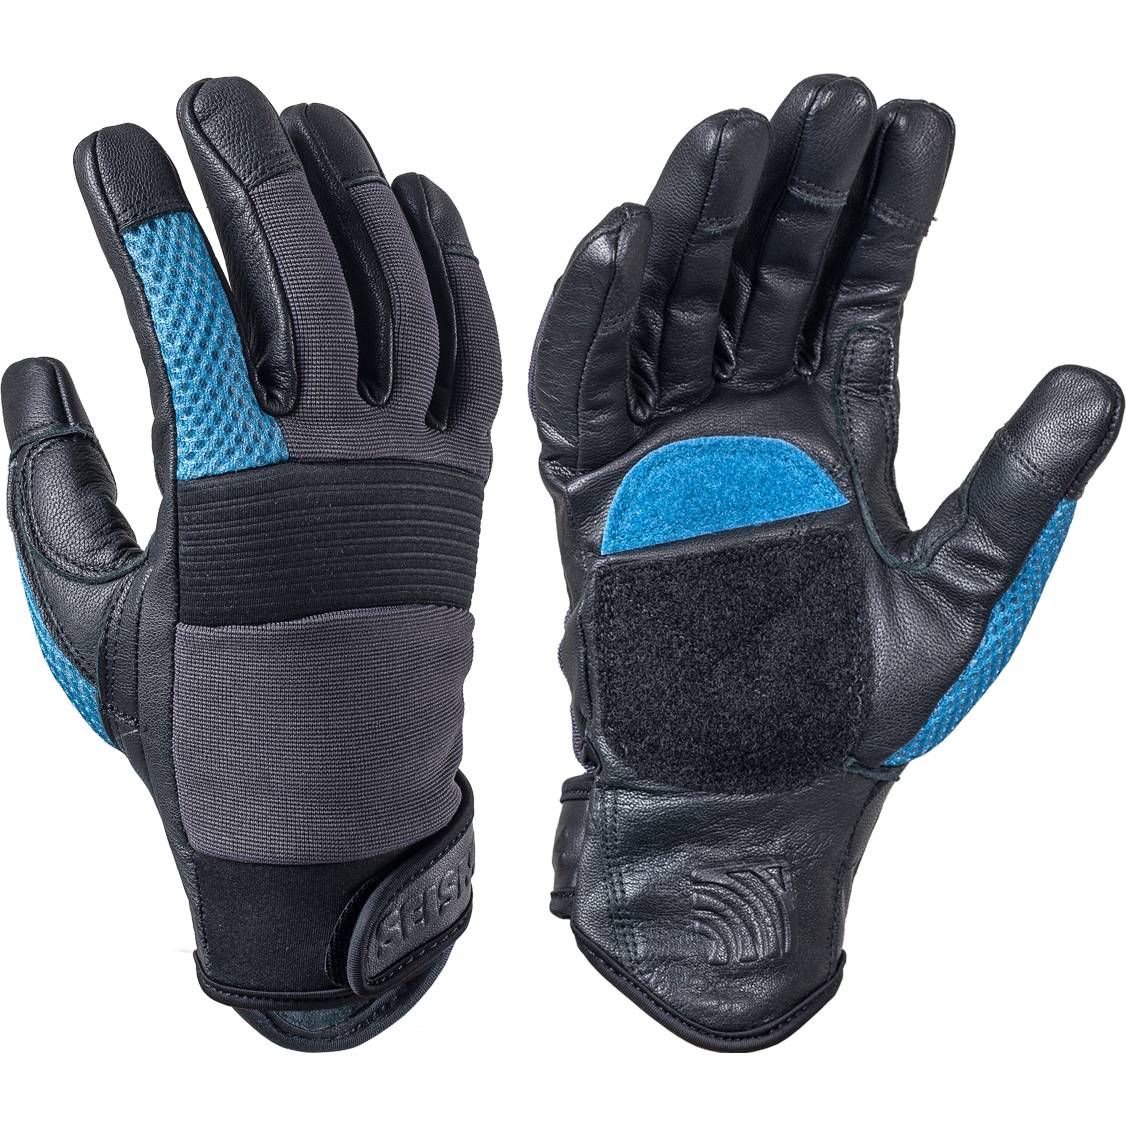 Seismic Freeride gloves in blue